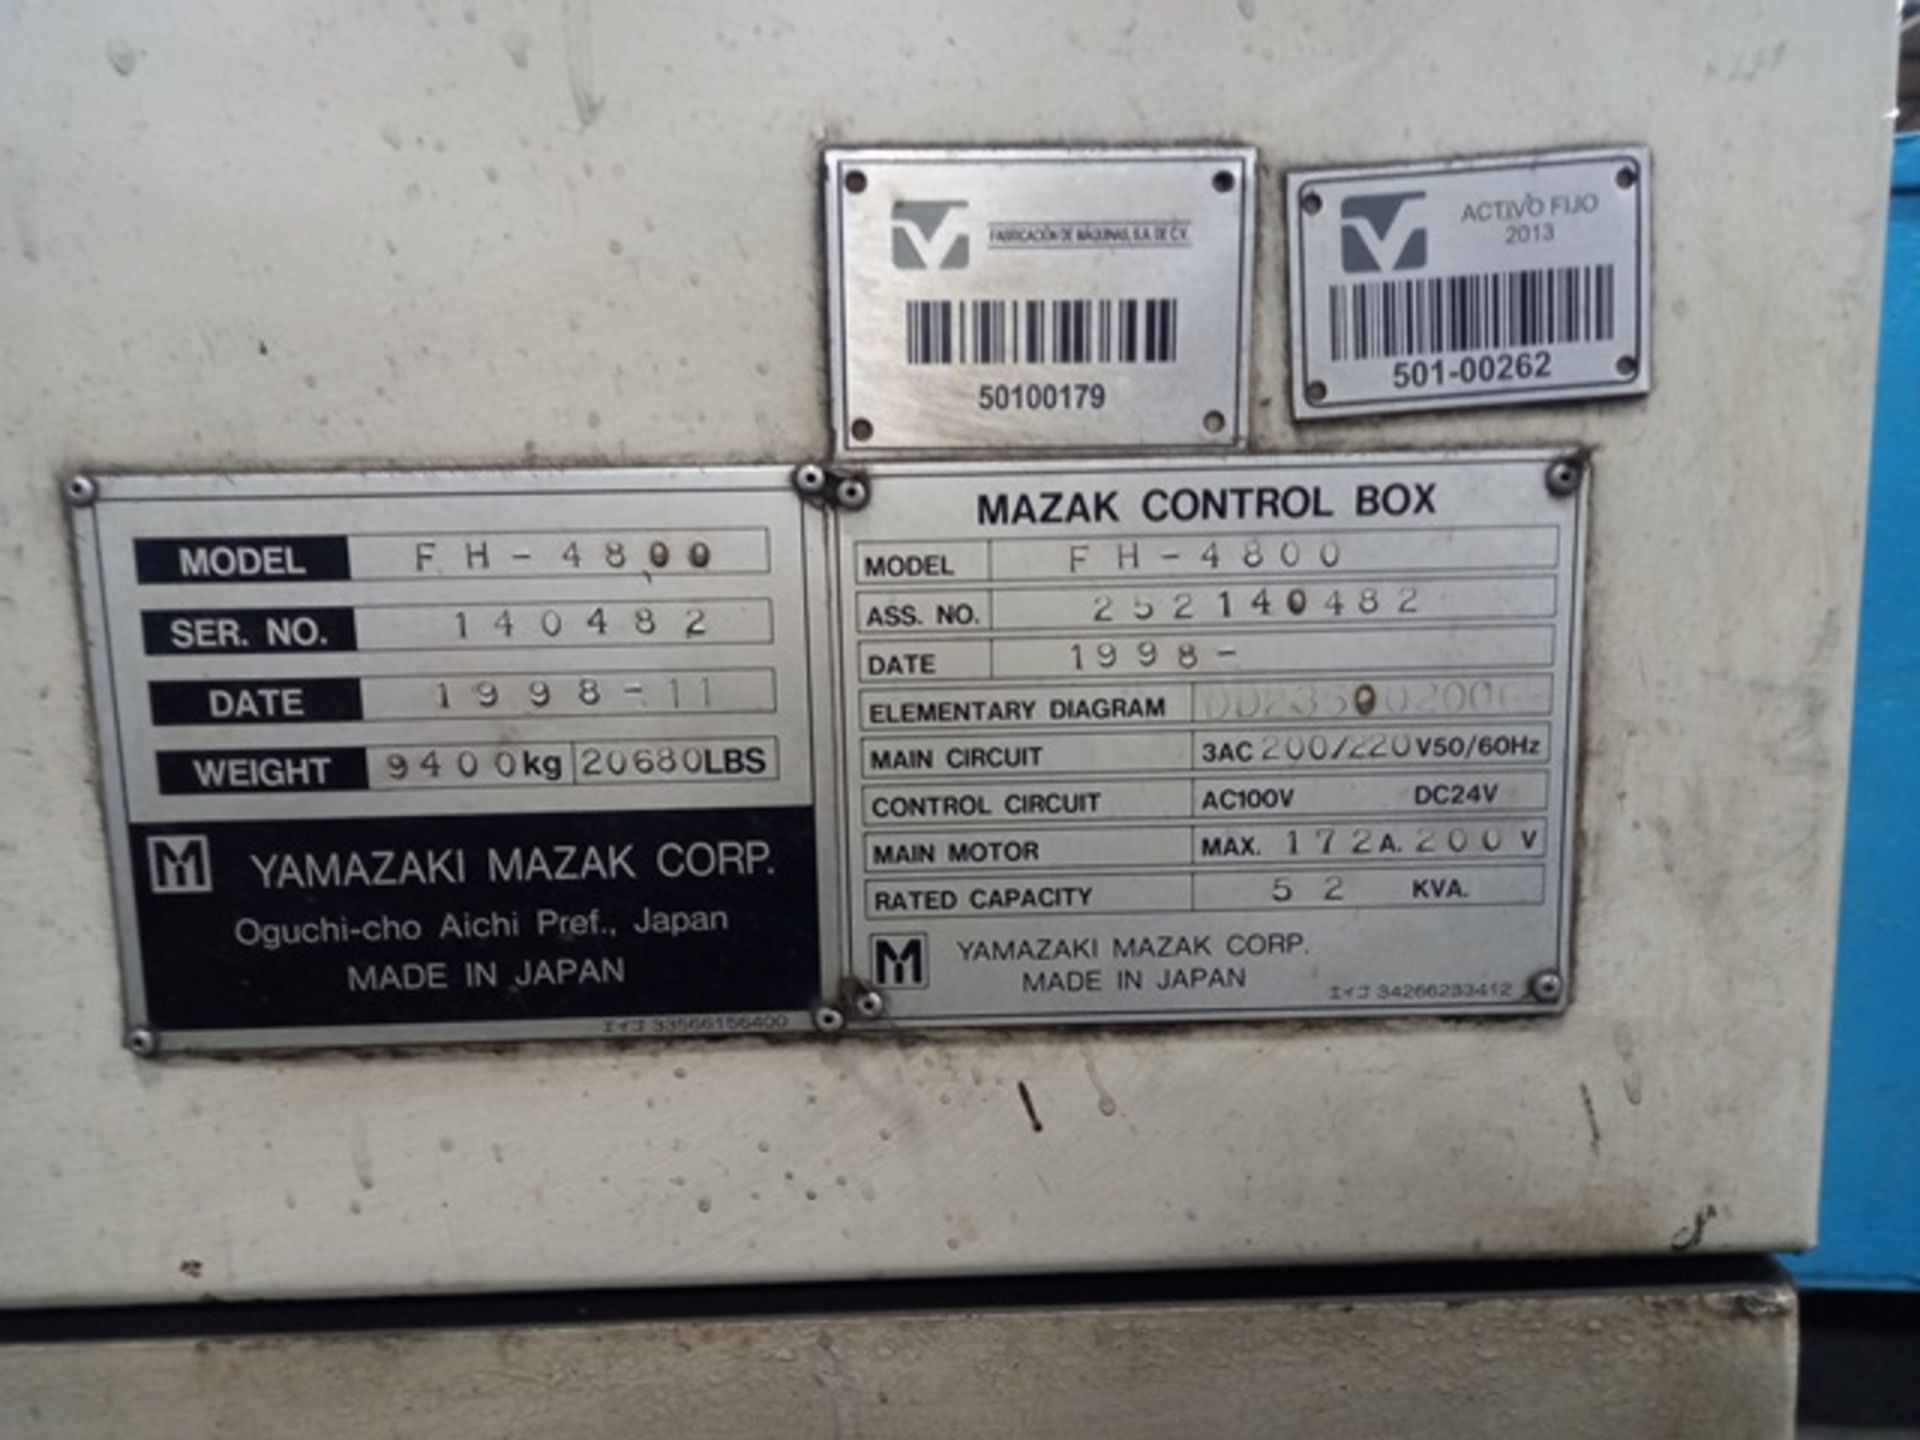 MAZAK FH-4800 HORIZONTAL MACHINING CENTER, S/N 140482, NEW 1998 - Image 14 of 14